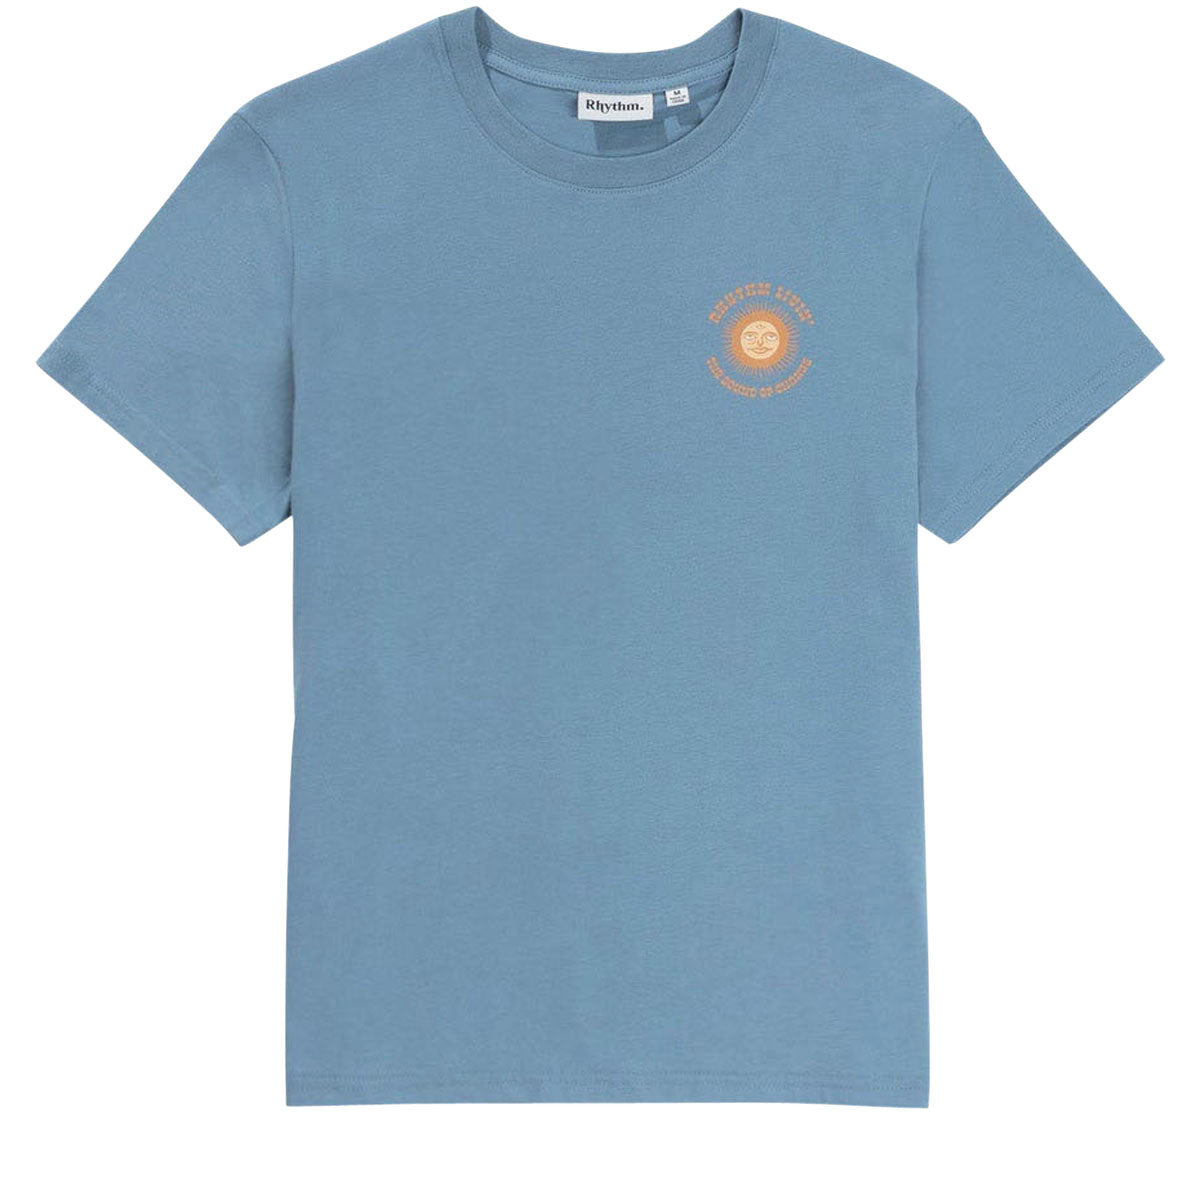 Rhythm Sun Life T-Shirt - Vintage Blue image 1